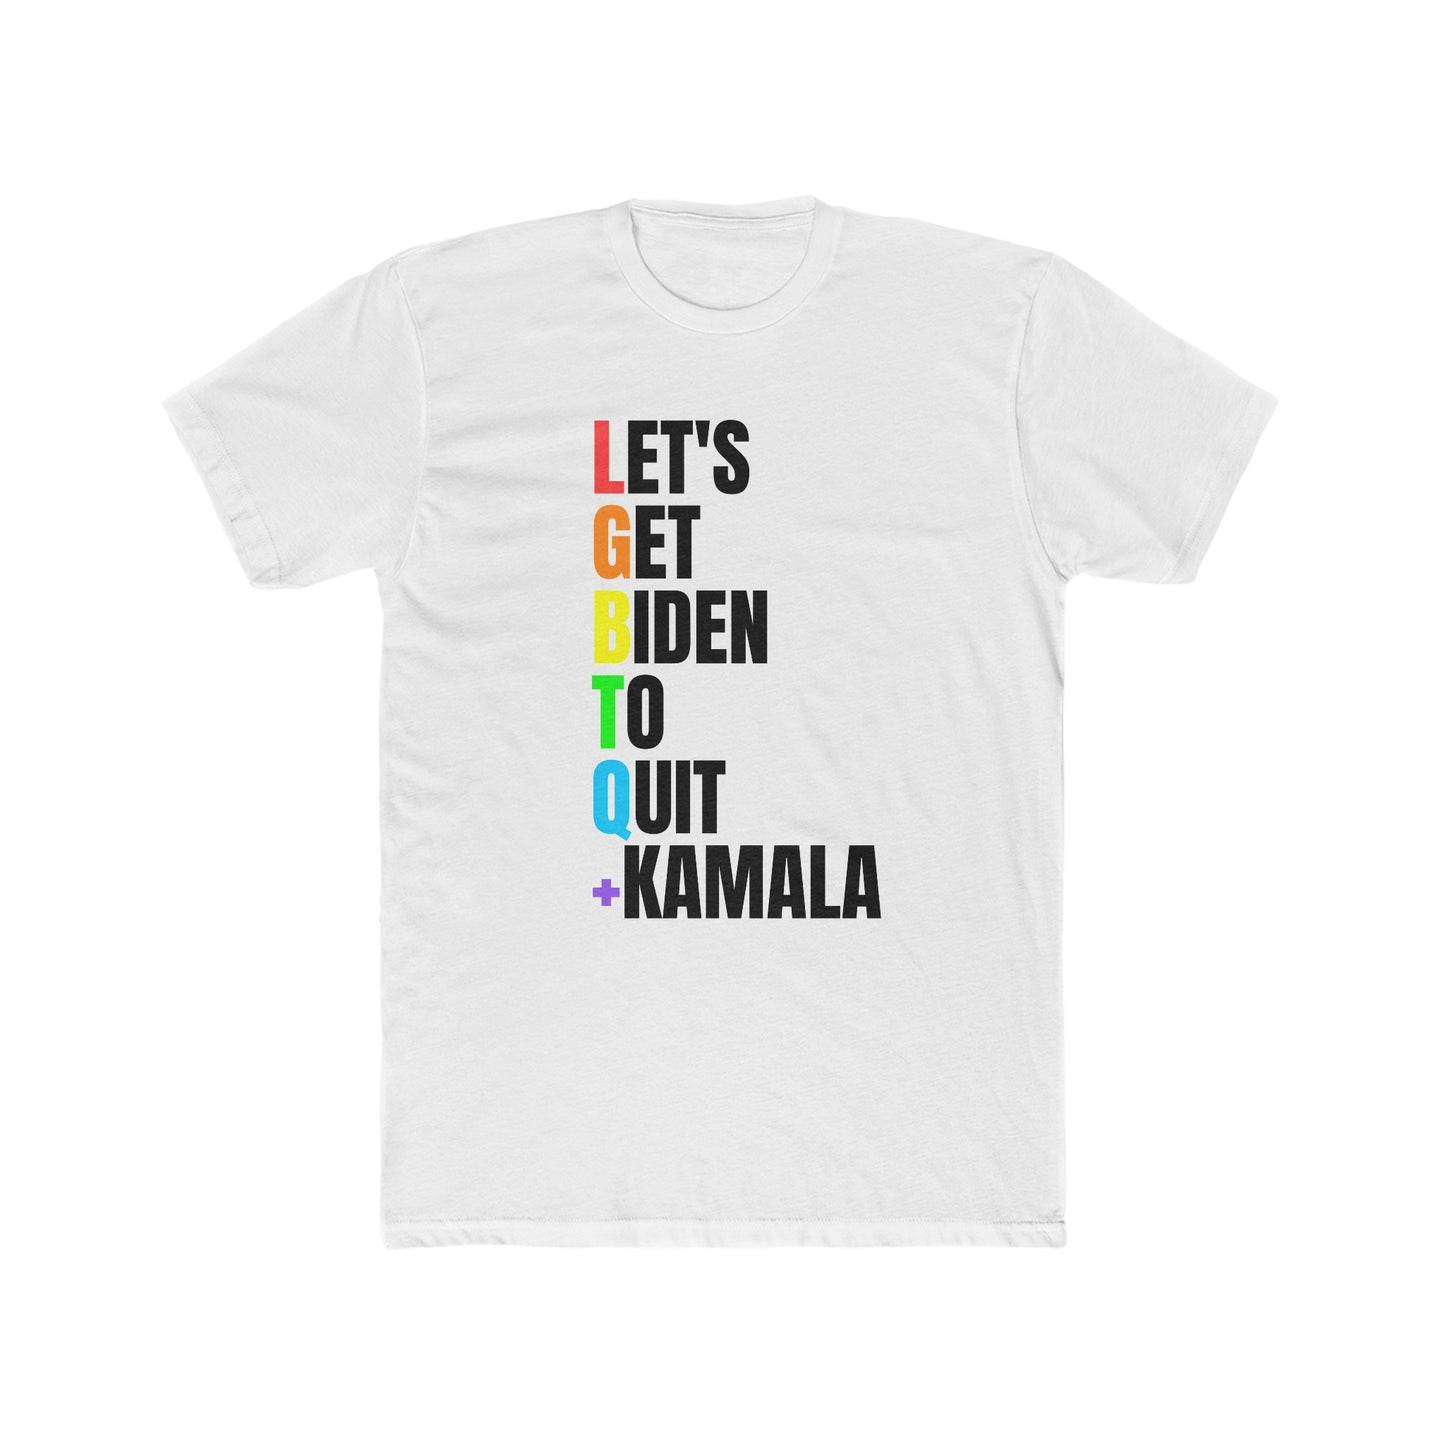 Let's Biden To Quit +Kamala T-Shirt